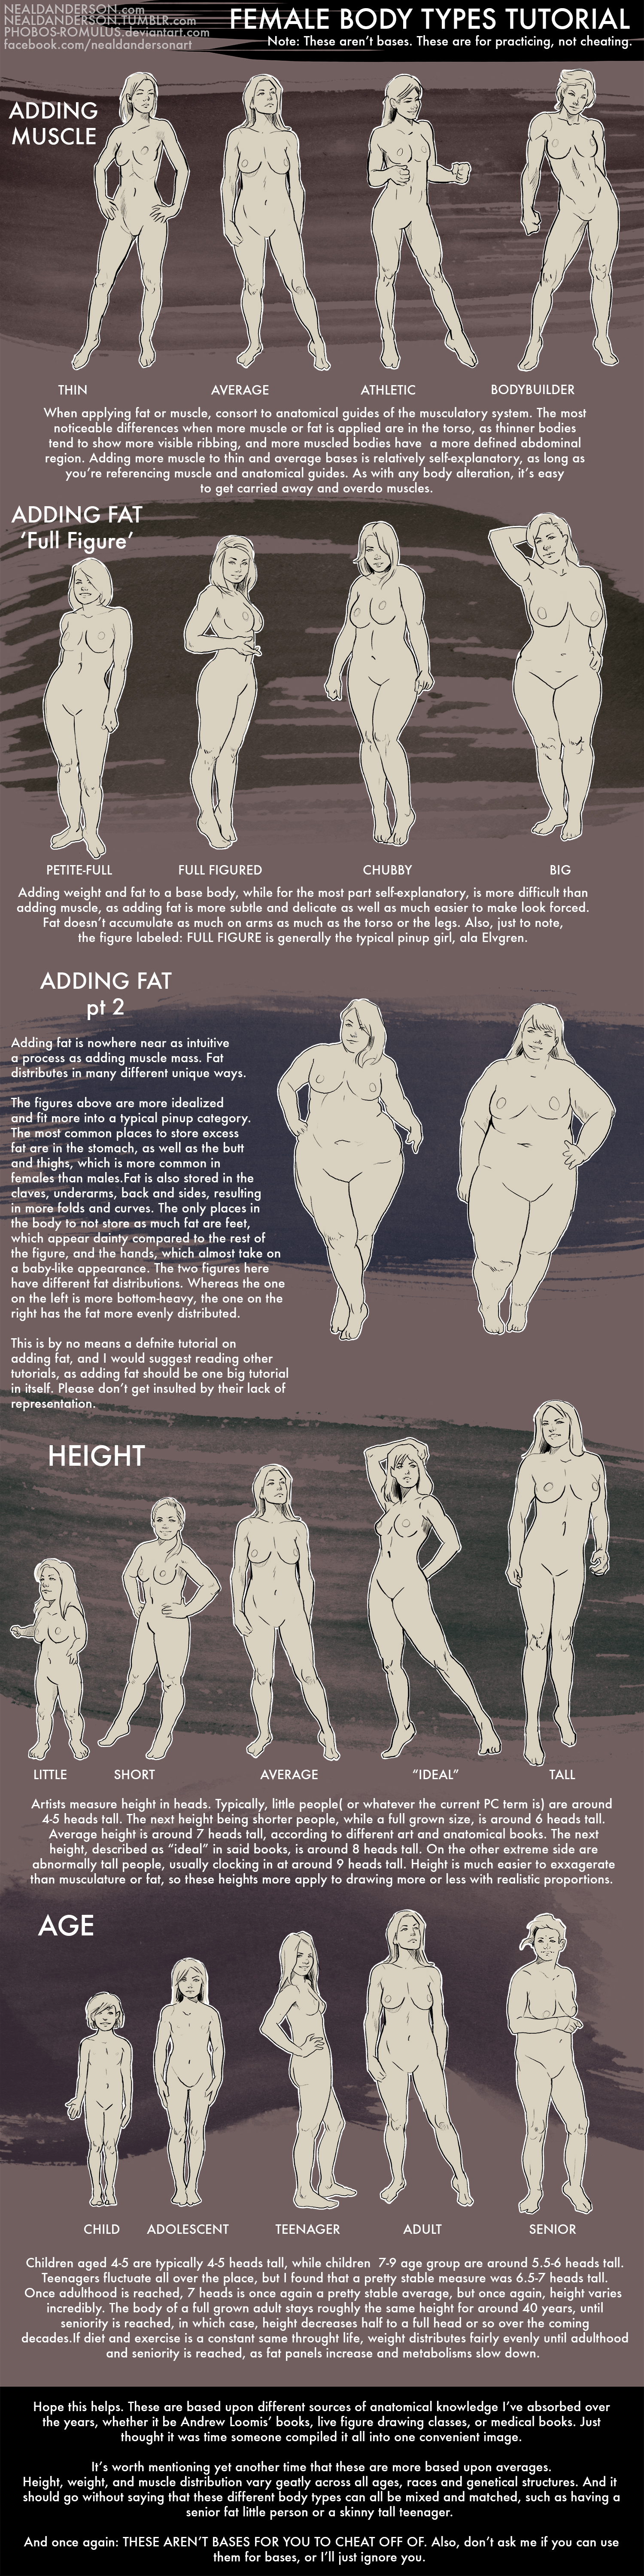 Female Body Types Tutorial by Phobos-Romulus on DeviantArt